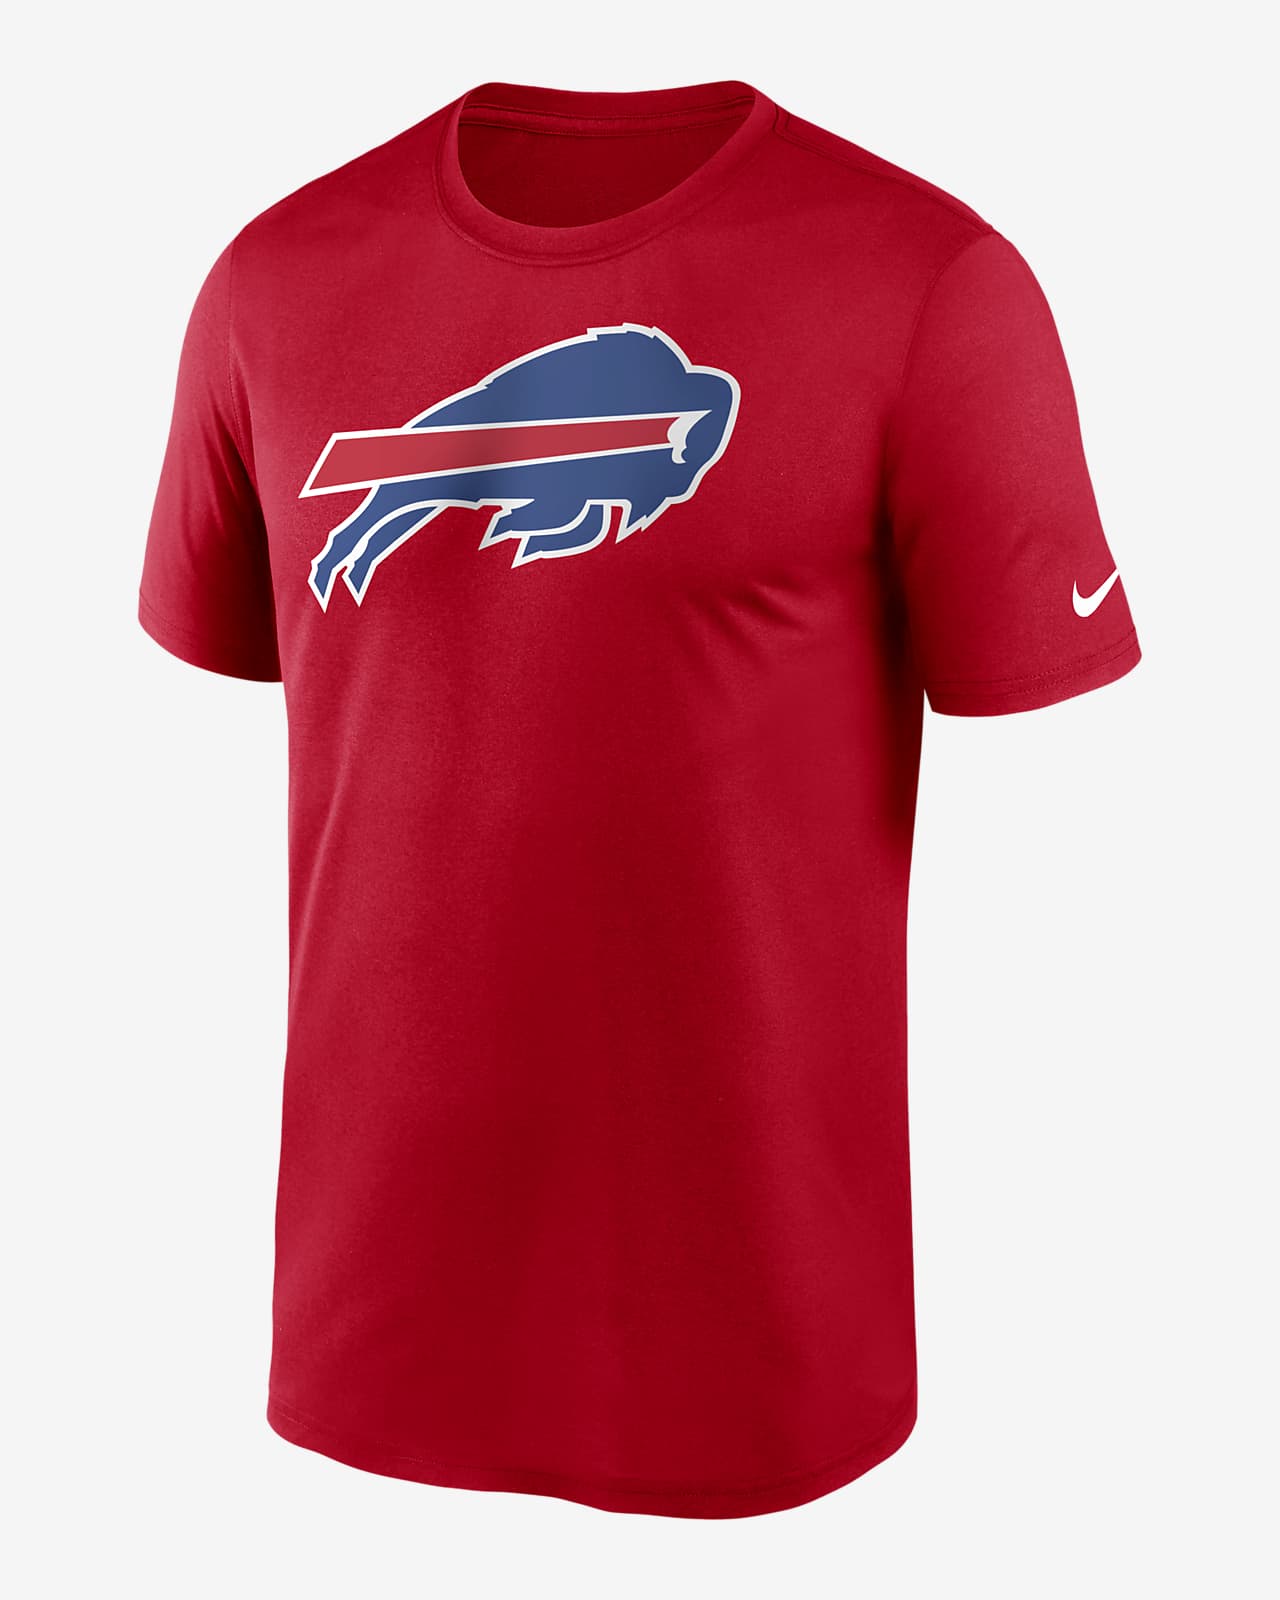 Nike Dri-FIT Logo Legend (NFL Buffalo Bills) Men's T-Shirt